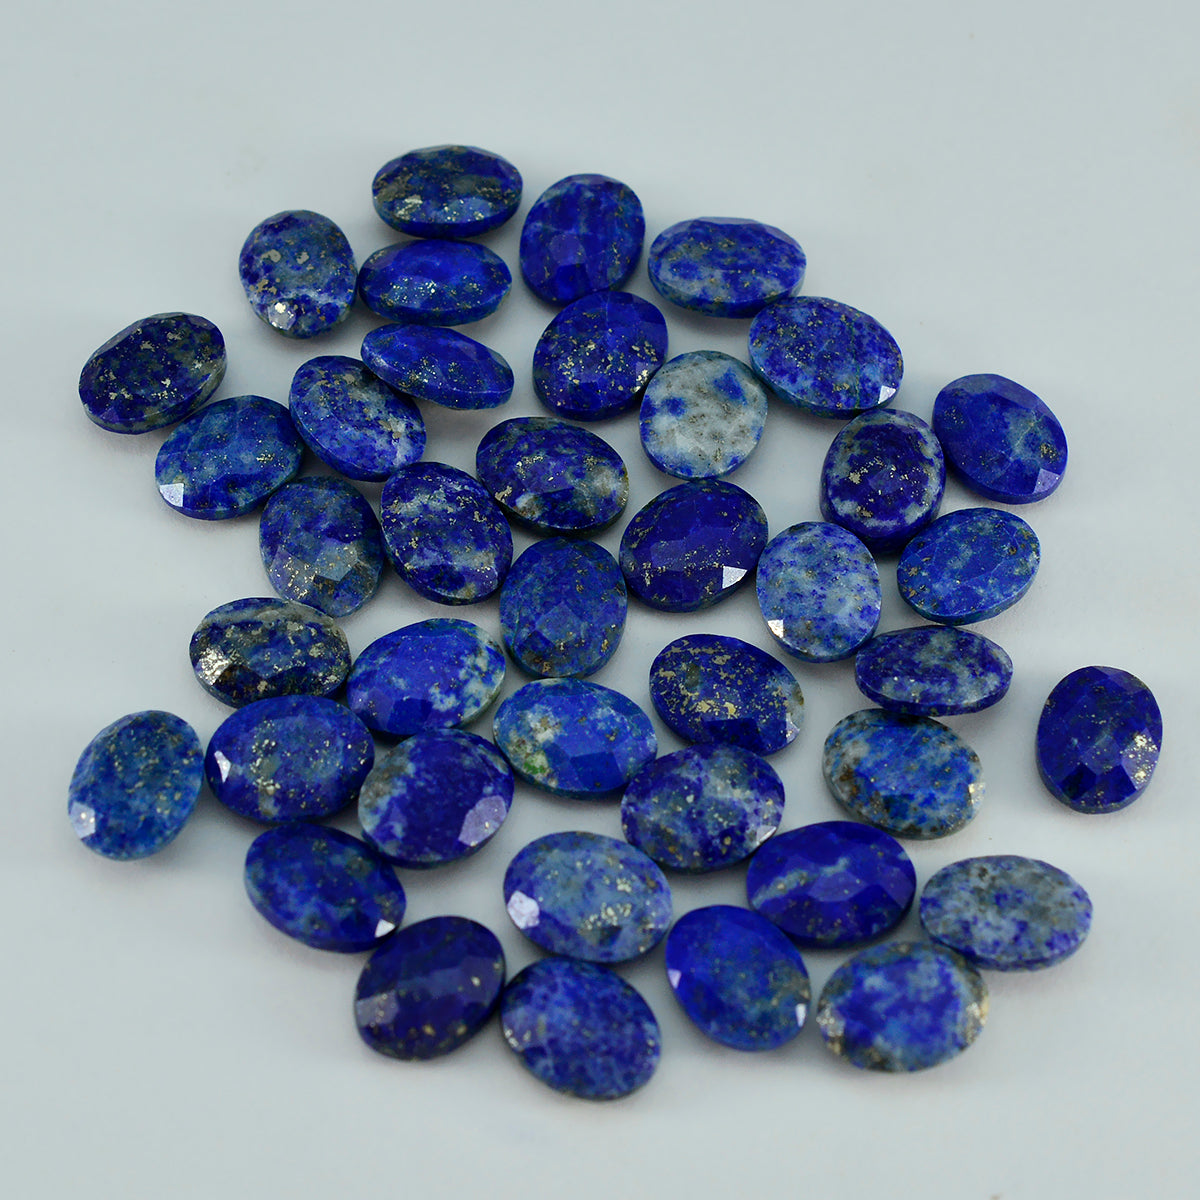 Riyogems 1 Stück echter blauer Lapislazuli, facettiert, 7 x 9 mm, ovale Form, schöner Qualitäts-Edelstein